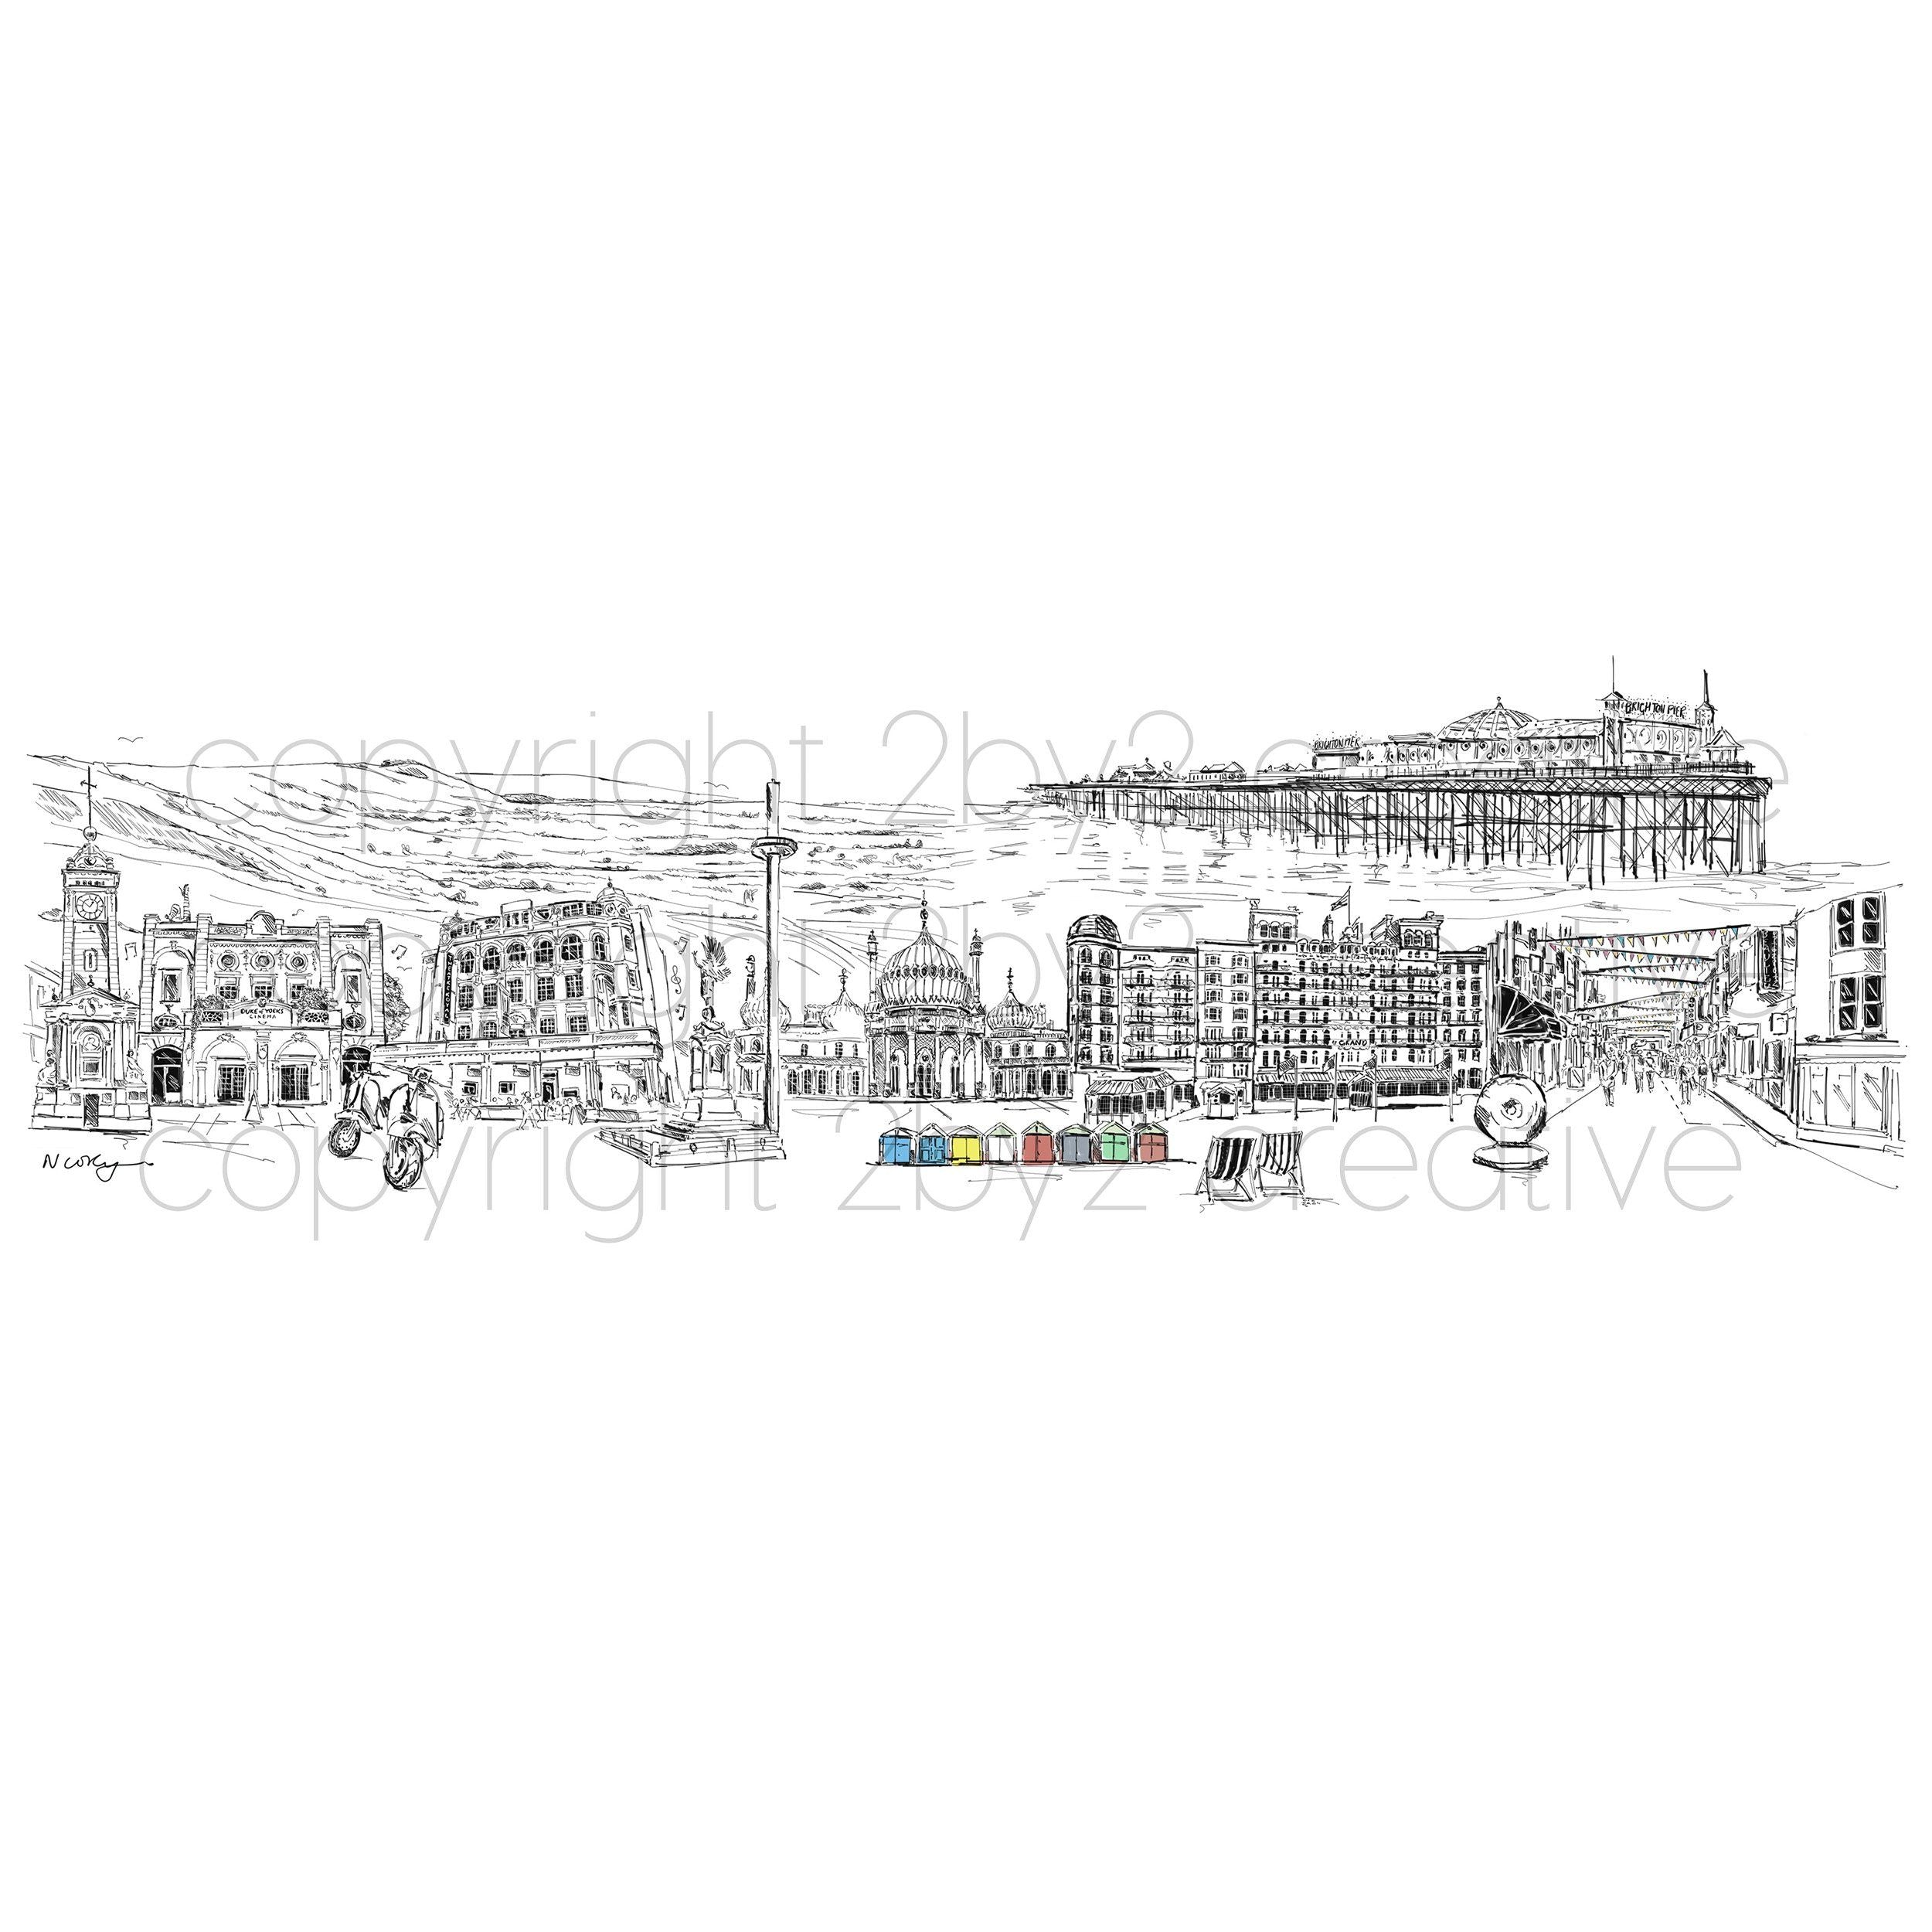 Copy of Brighton Skyline Print | Natalie Ryan Design